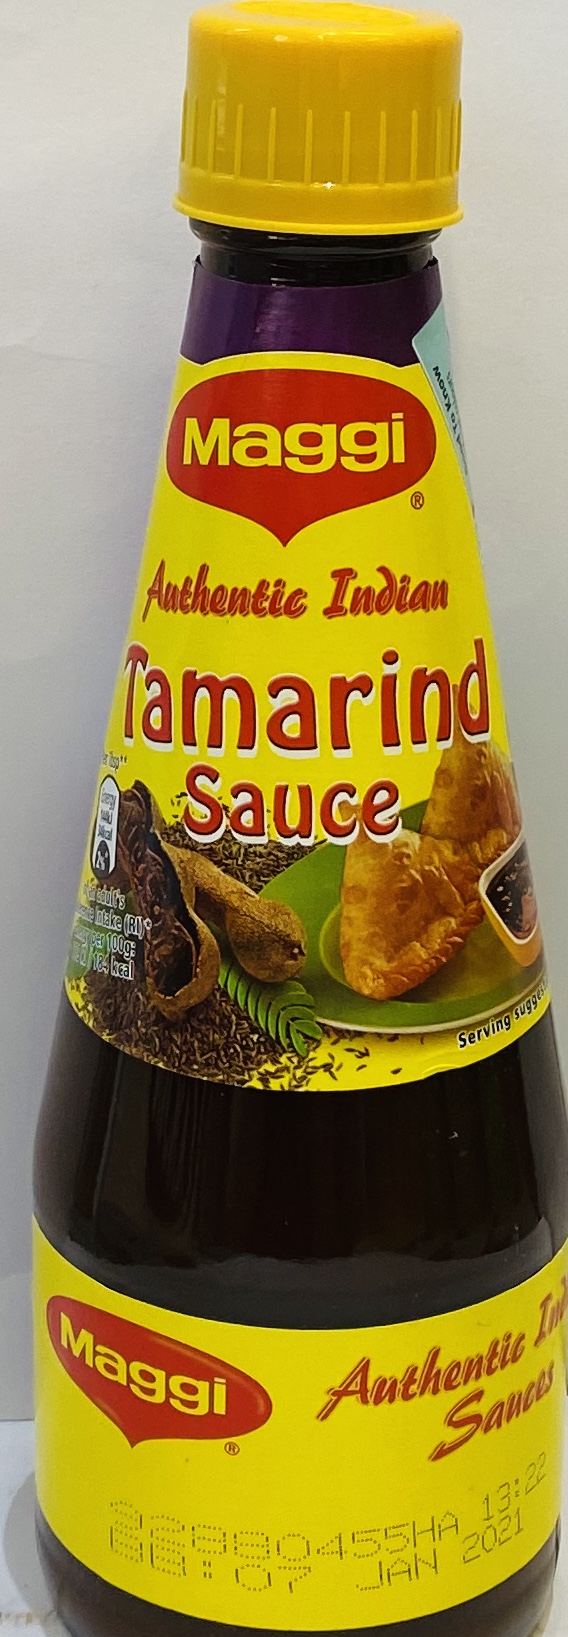 Maggi Tamarind Sauce Asian Food Co